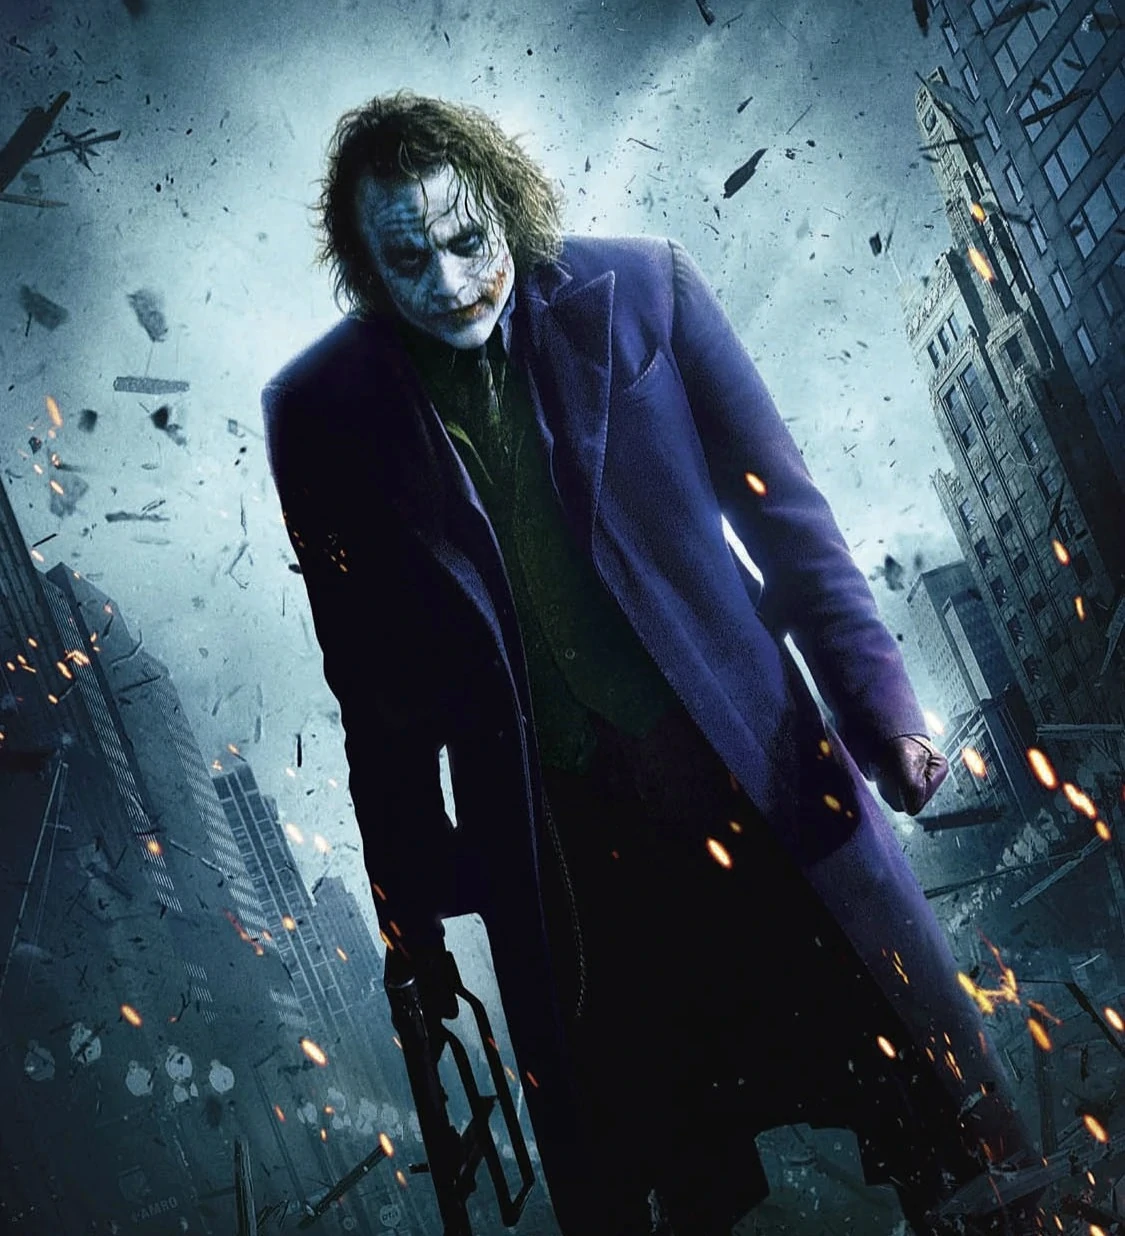 Joker Evil Smile Wallpaper, HD Superheroes 4K Wallpapers, Images and  Background - Wallpapers Den